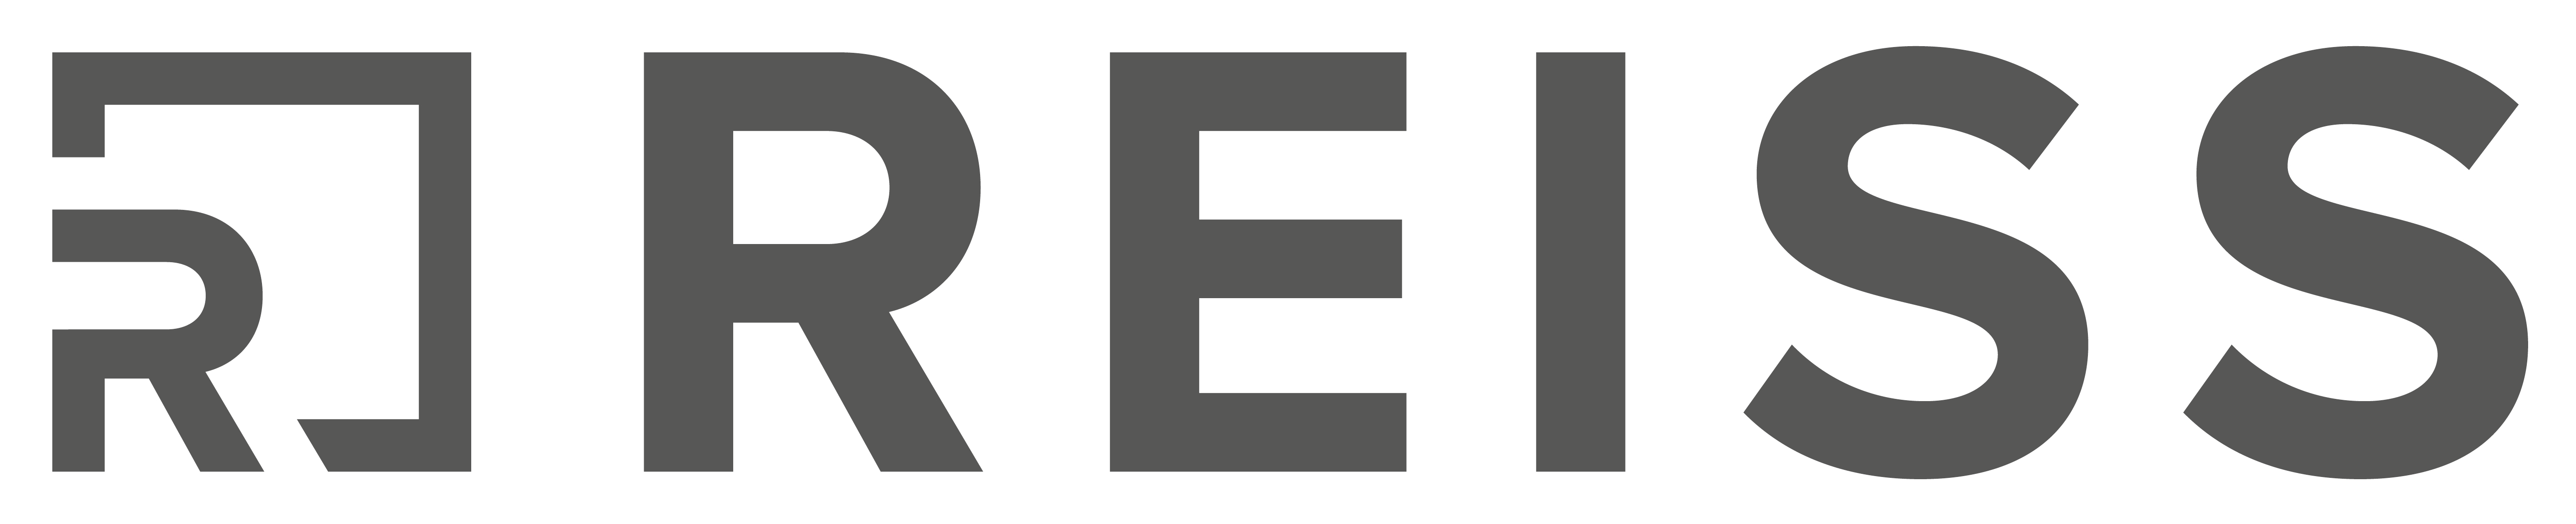 reiss-logo-aktuell3